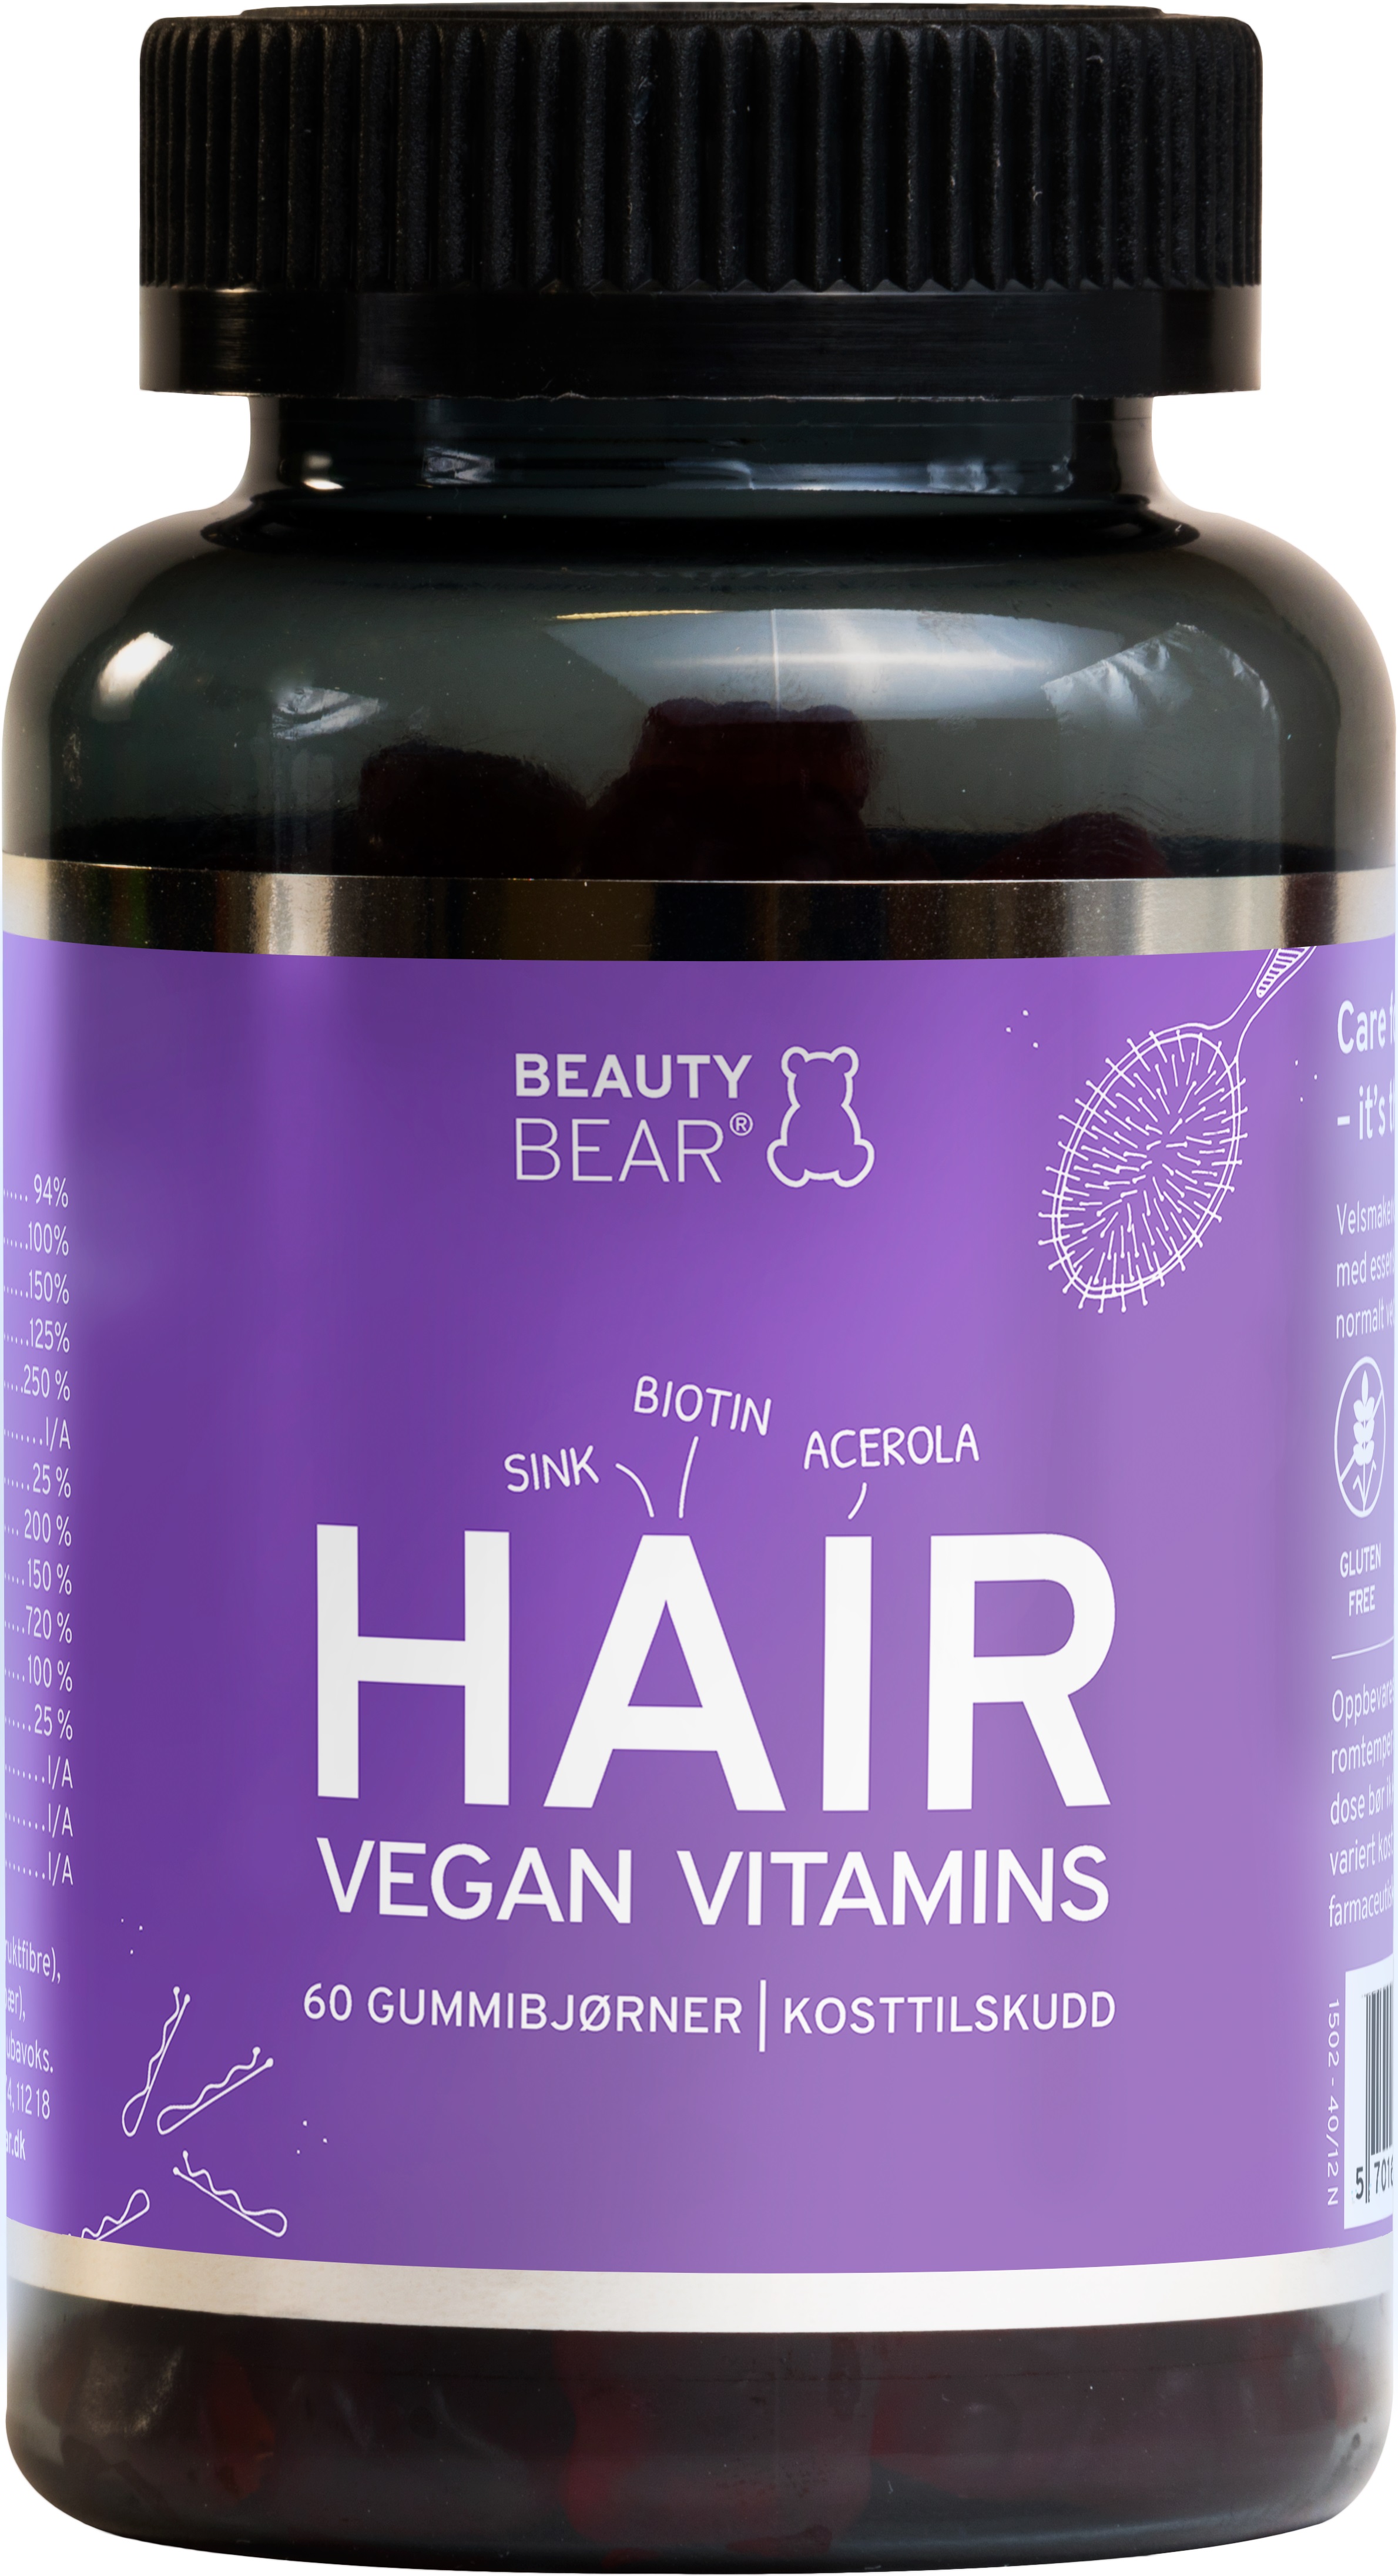 Beauty Bear Hair Vegan Vitamins tyggetab, 60 stk.